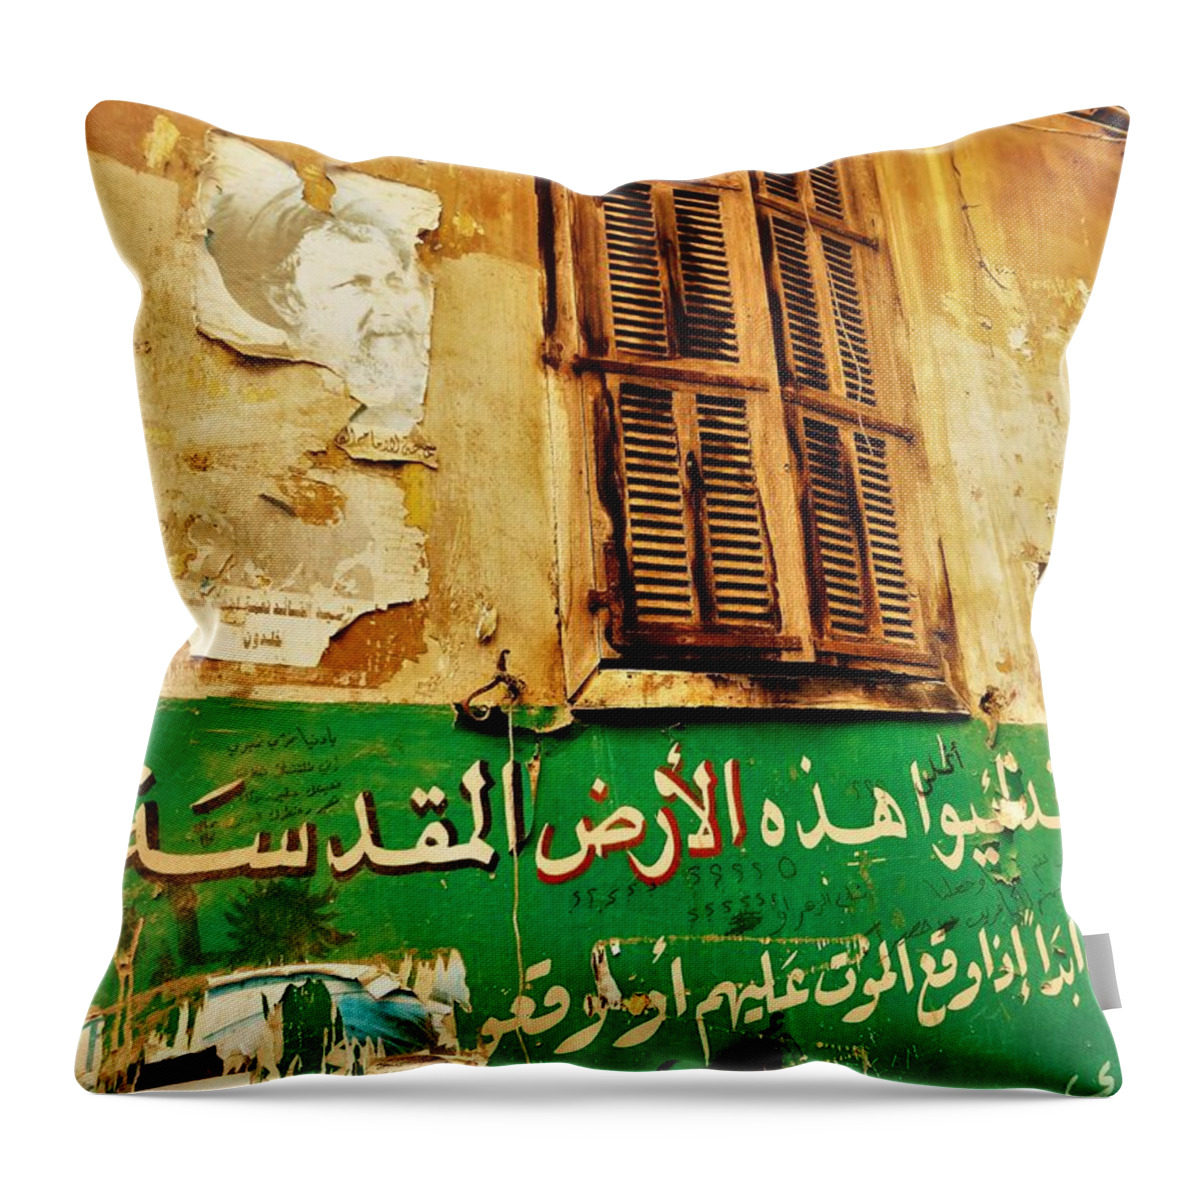 Beirut Throw Pillow featuring the photograph Basta Wall Art in Beirut by Funkpix Photo Hunter